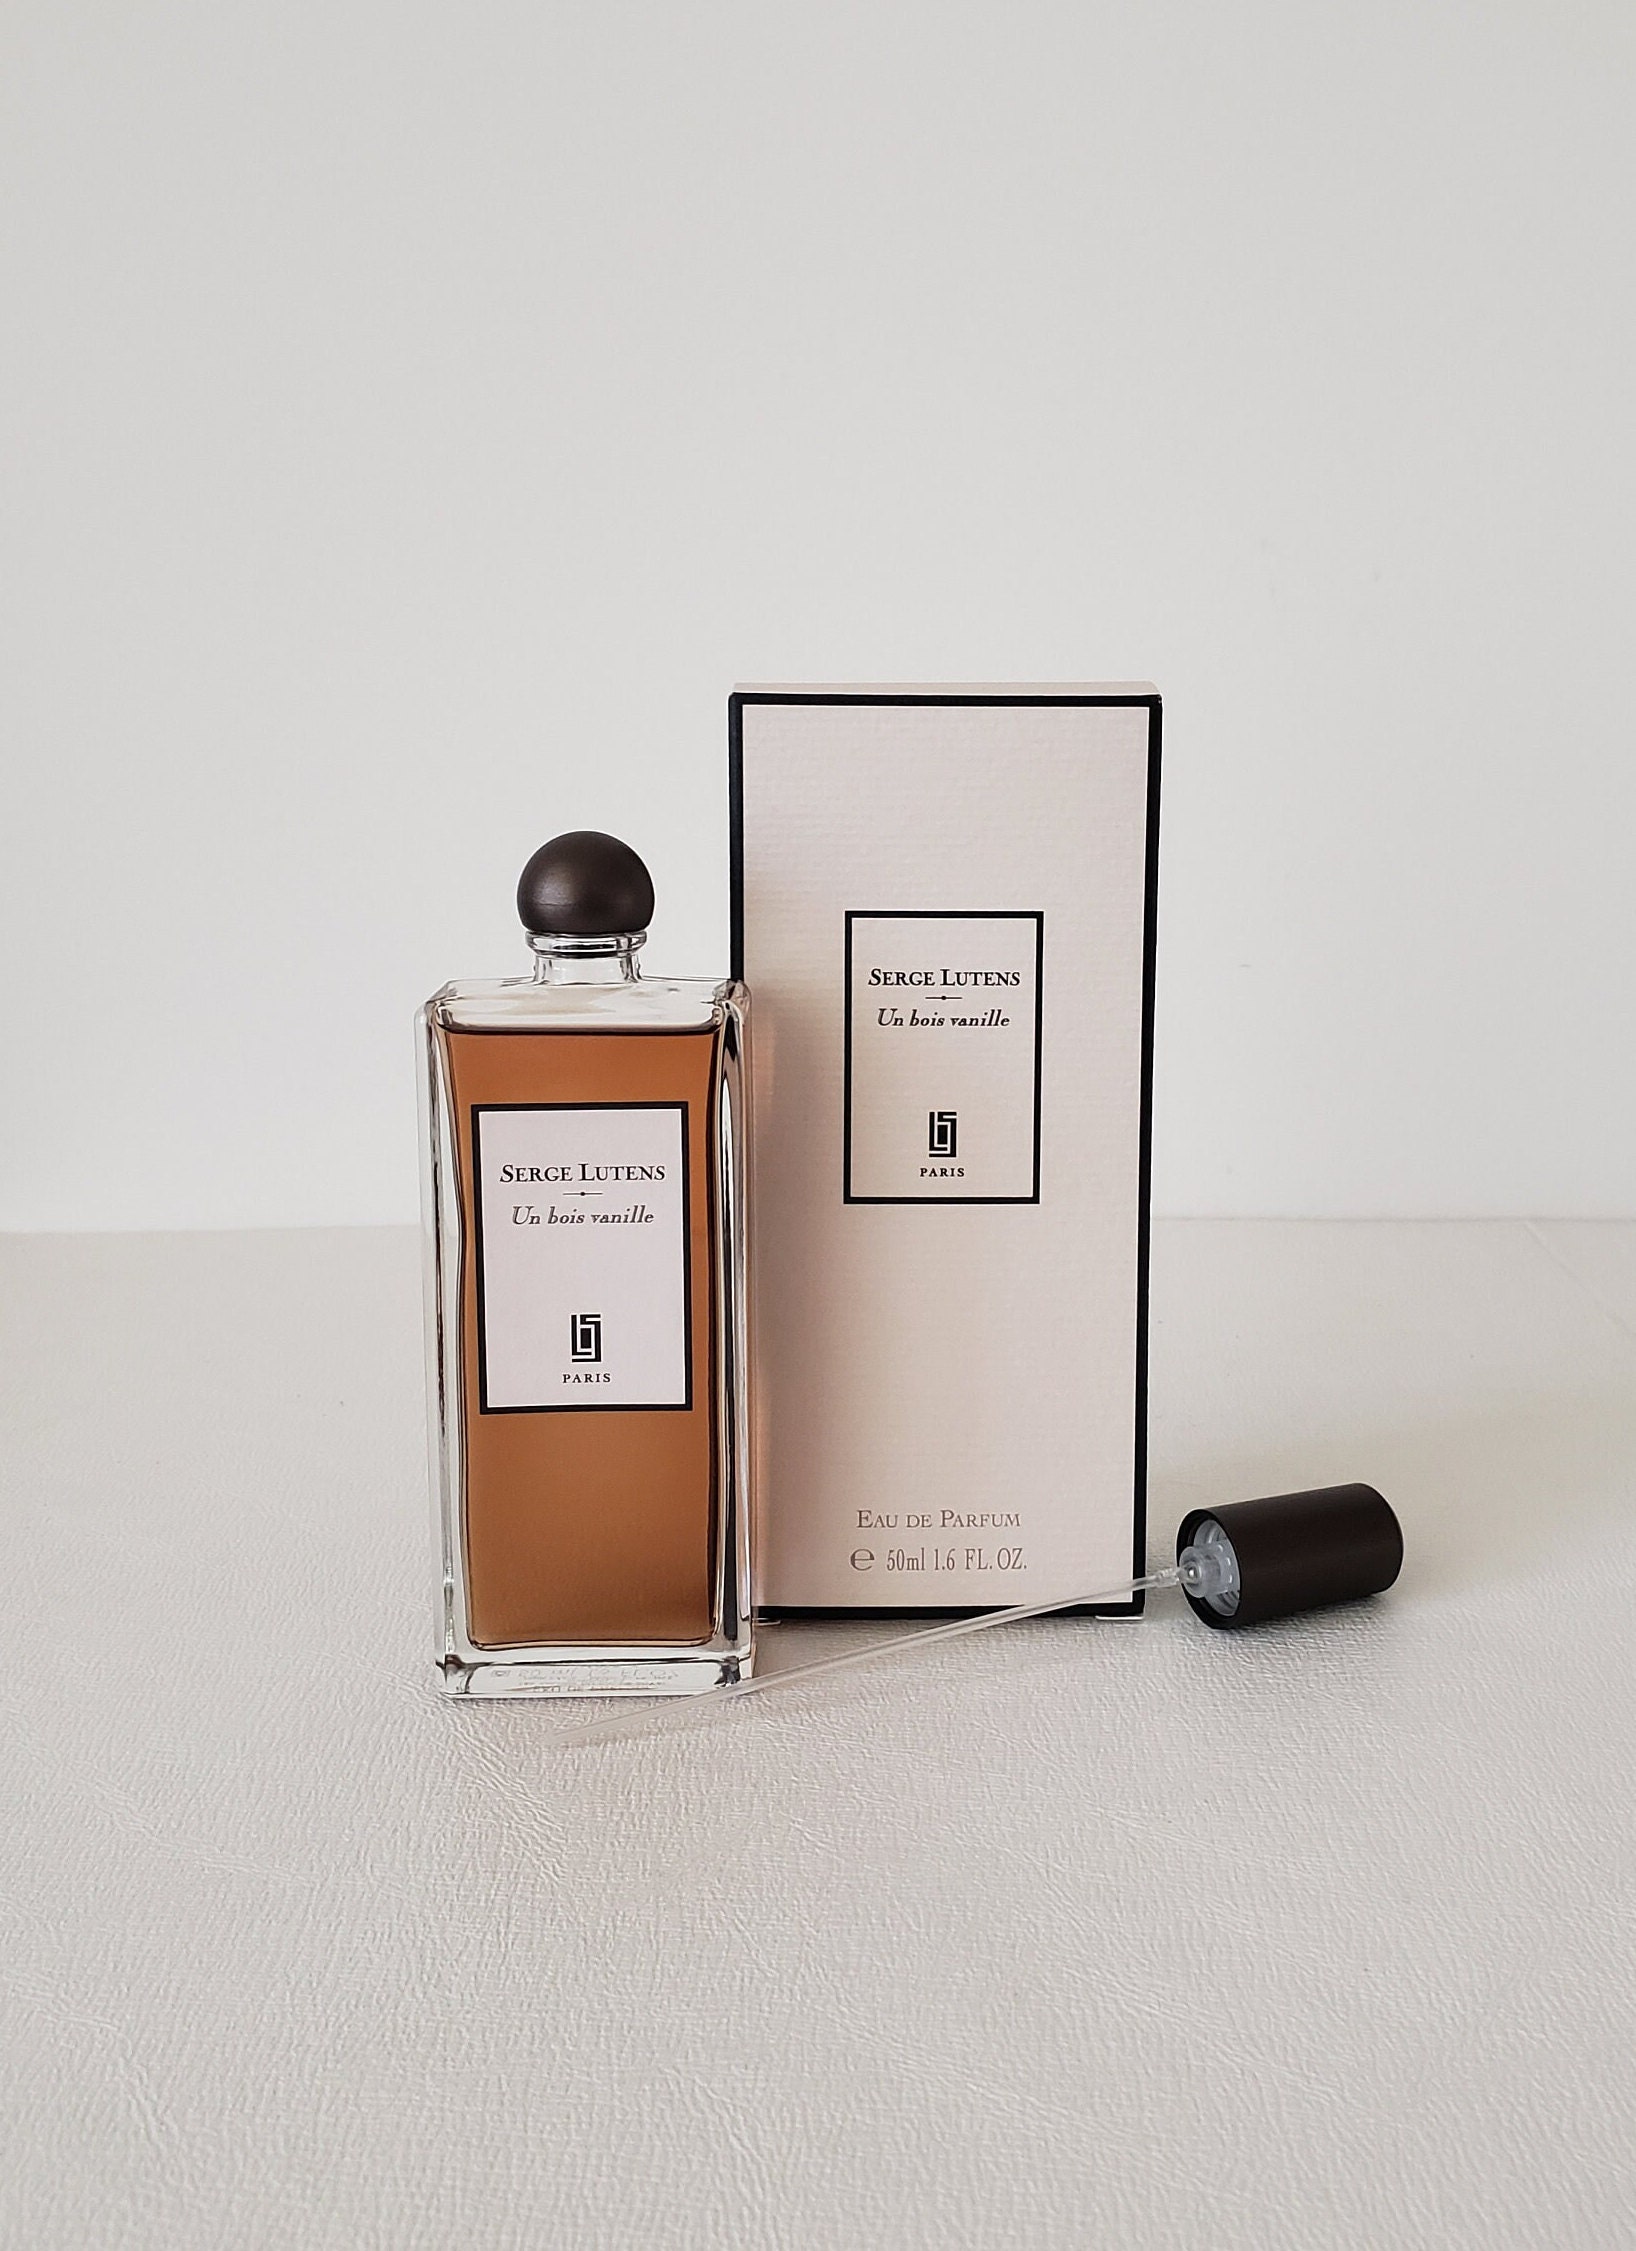 Avon FANTASQUE LOUIS FERAUD PARIS Perfume Flacon .25 FL. oz Factory Sealed